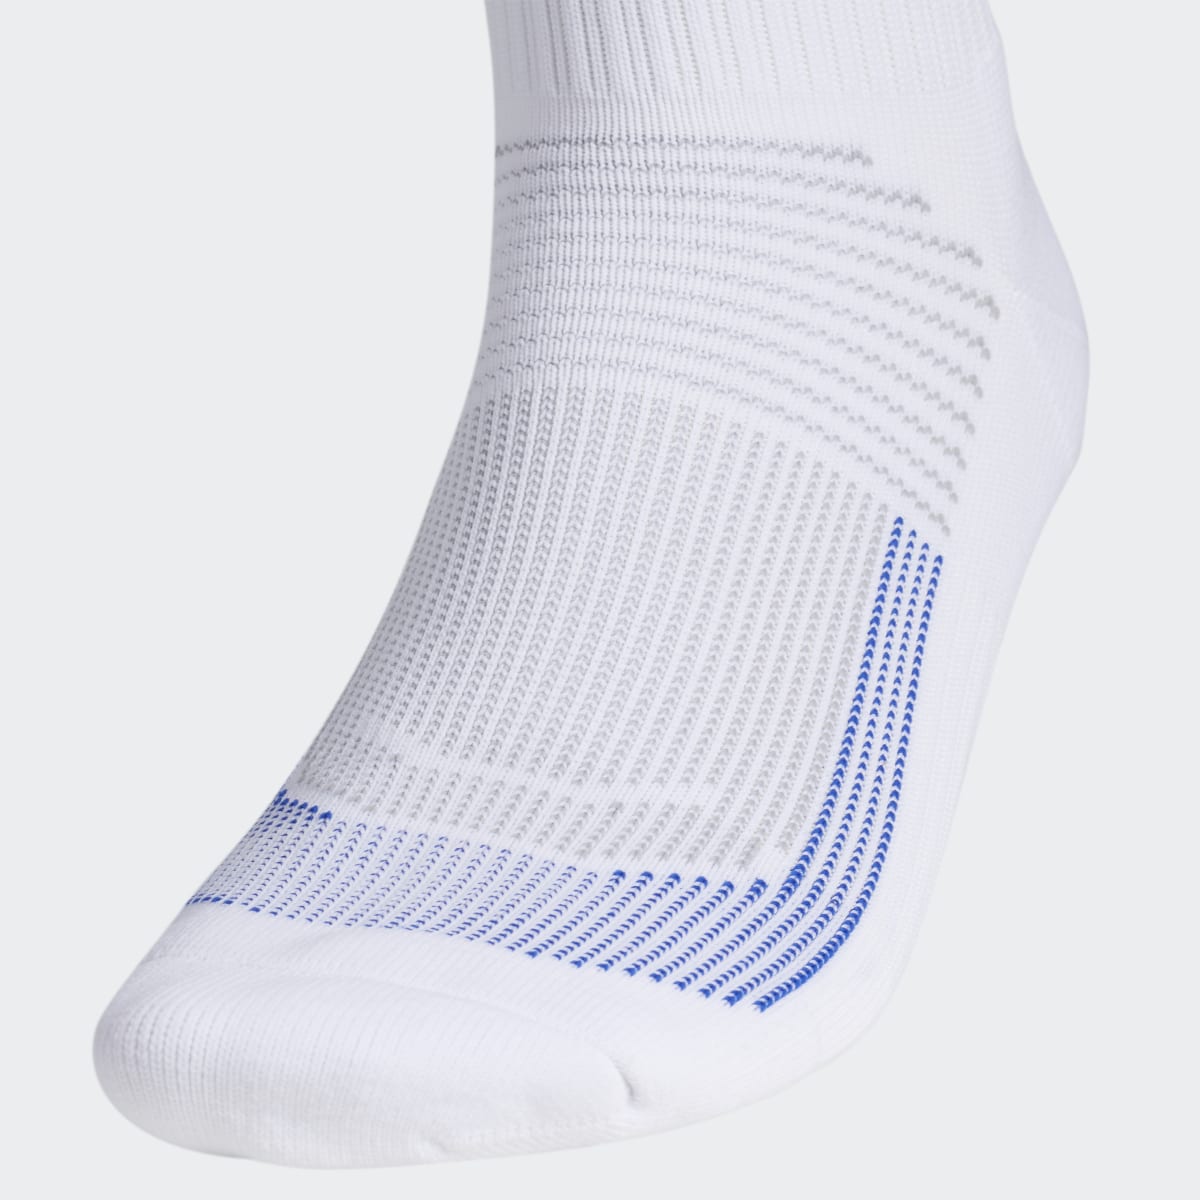 Adidas Superlite Ultraboost Quarter Socks 2 Pairs. 4